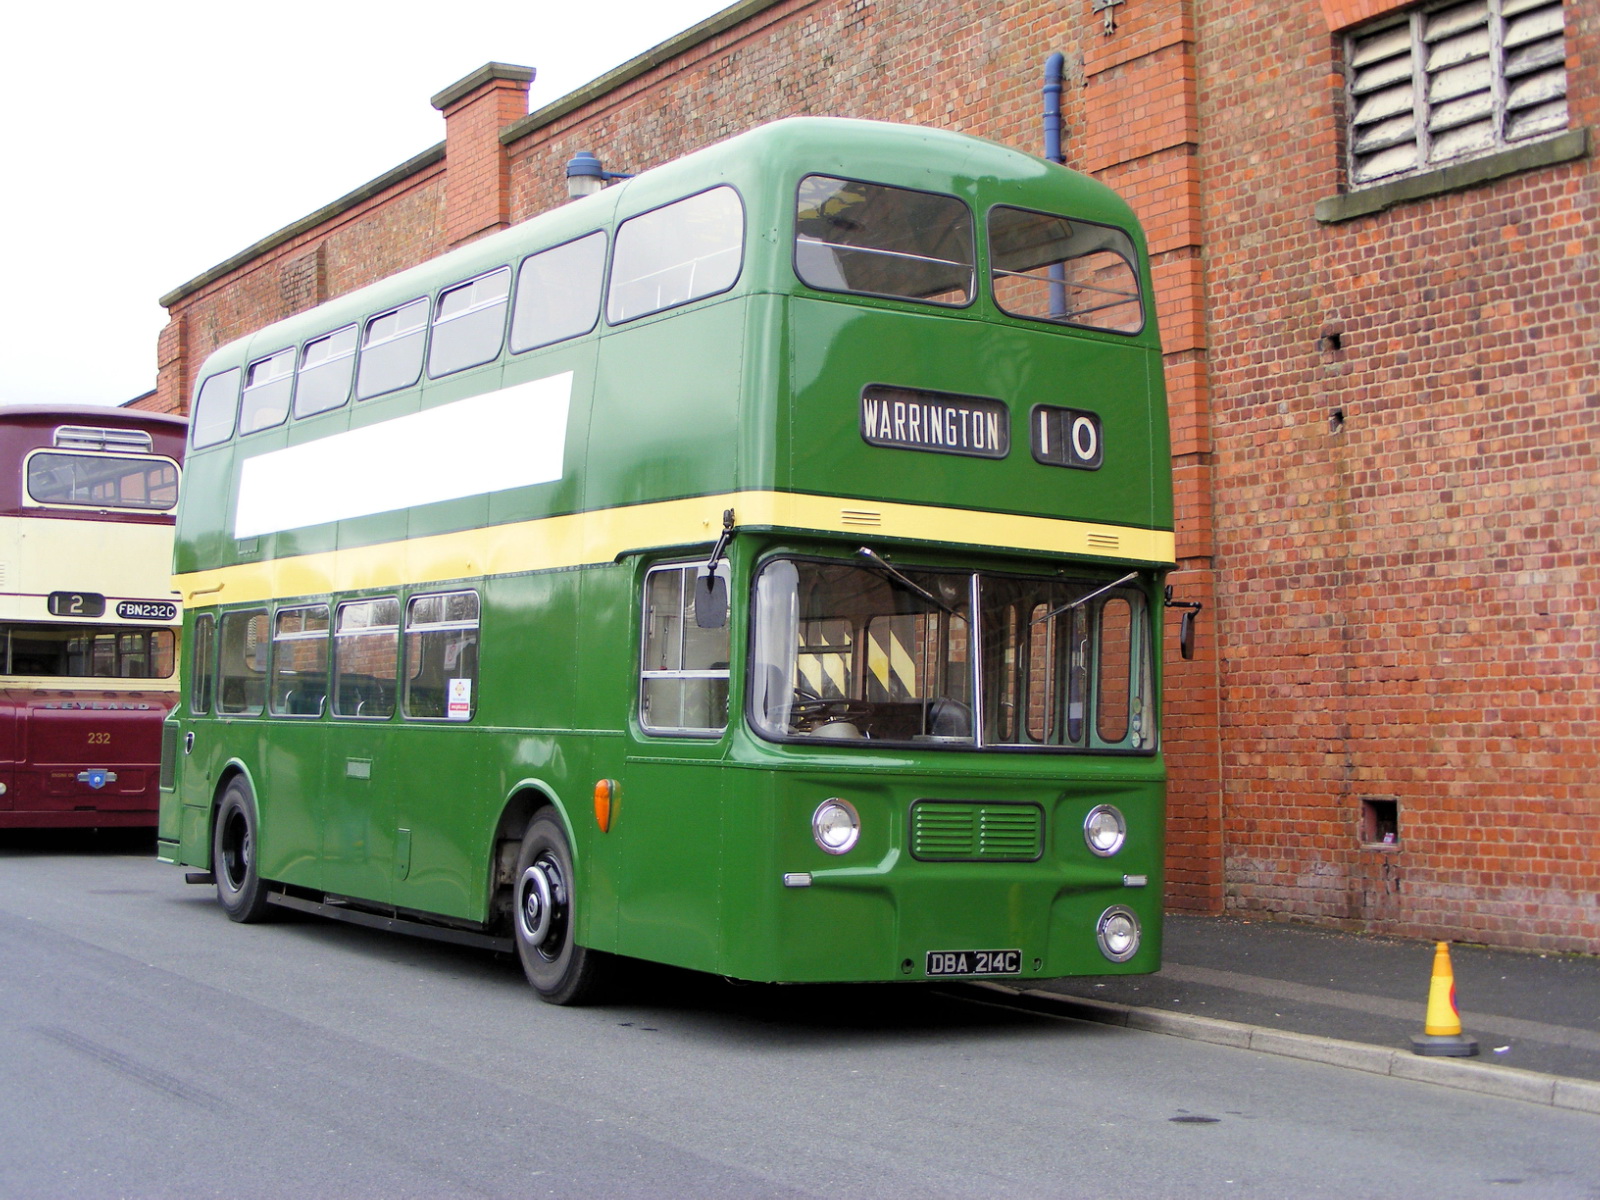 Salford_City_Transport_bus_214_(DBA_214C